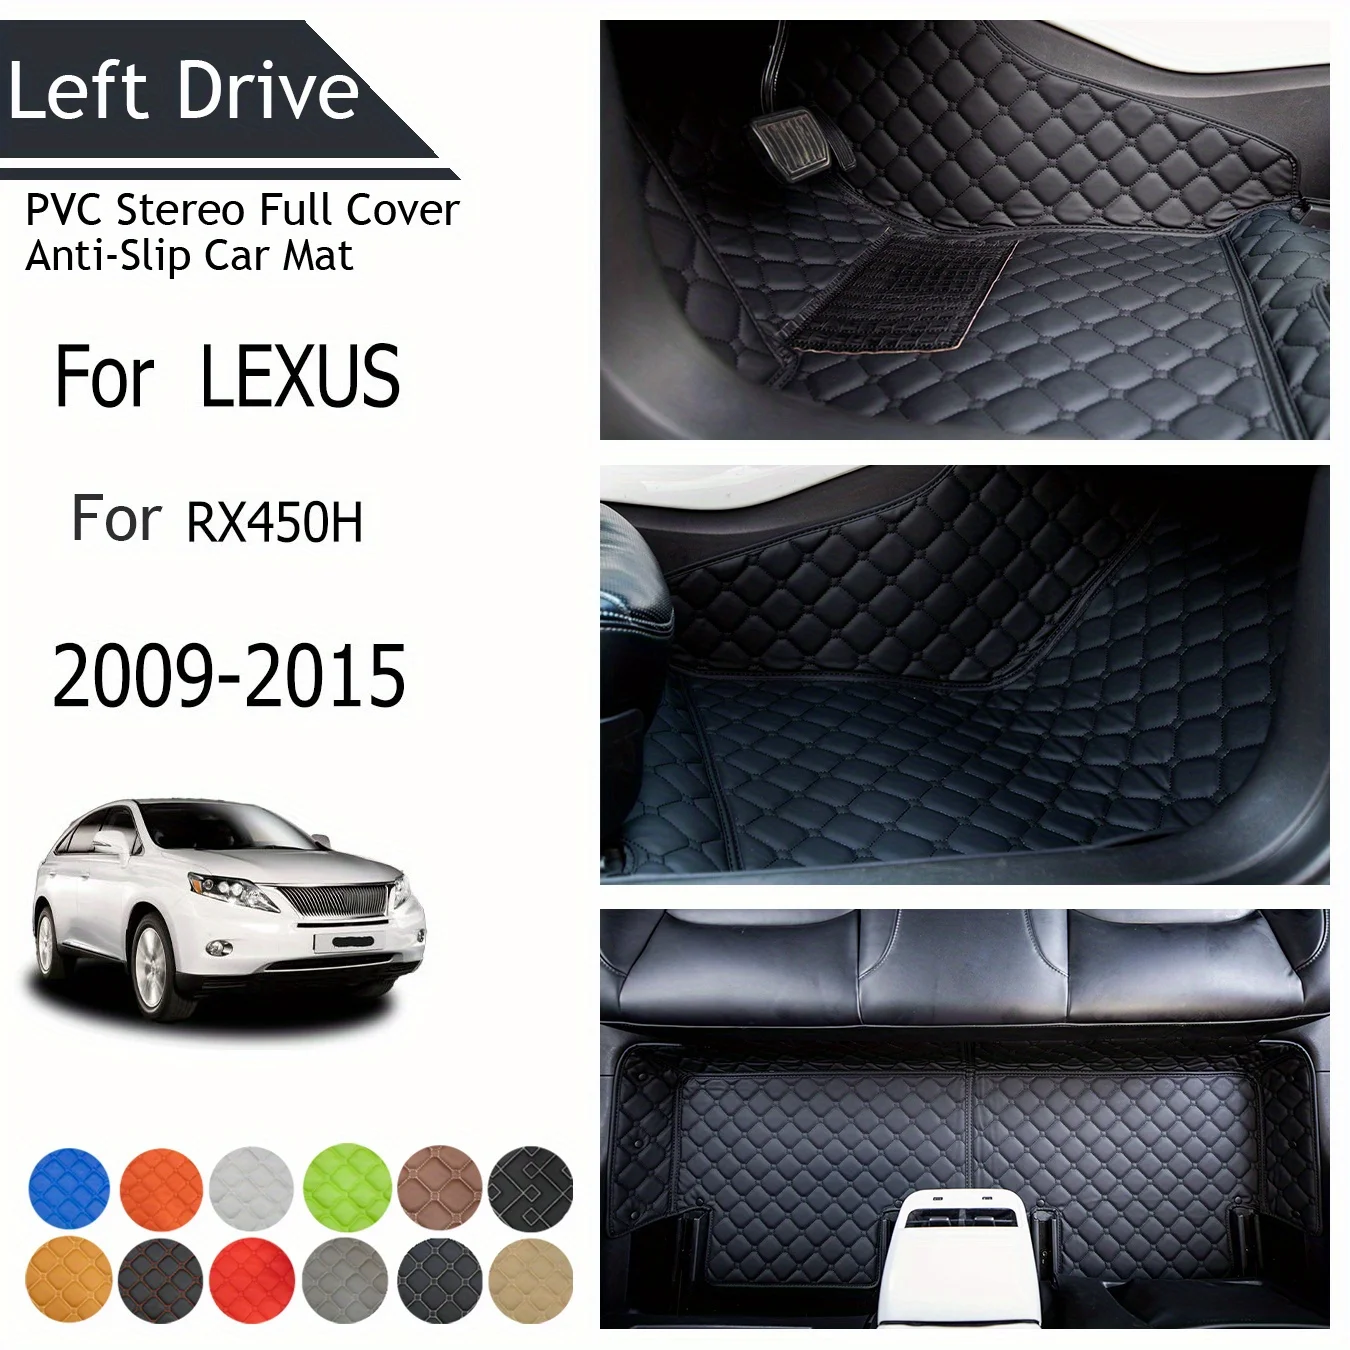 

TEGART 【LHD】For LEXUS For RX450H 2009-2015 Three Layer PVC Stereo Full Cover Anti-Slip Car Mat car mats floor